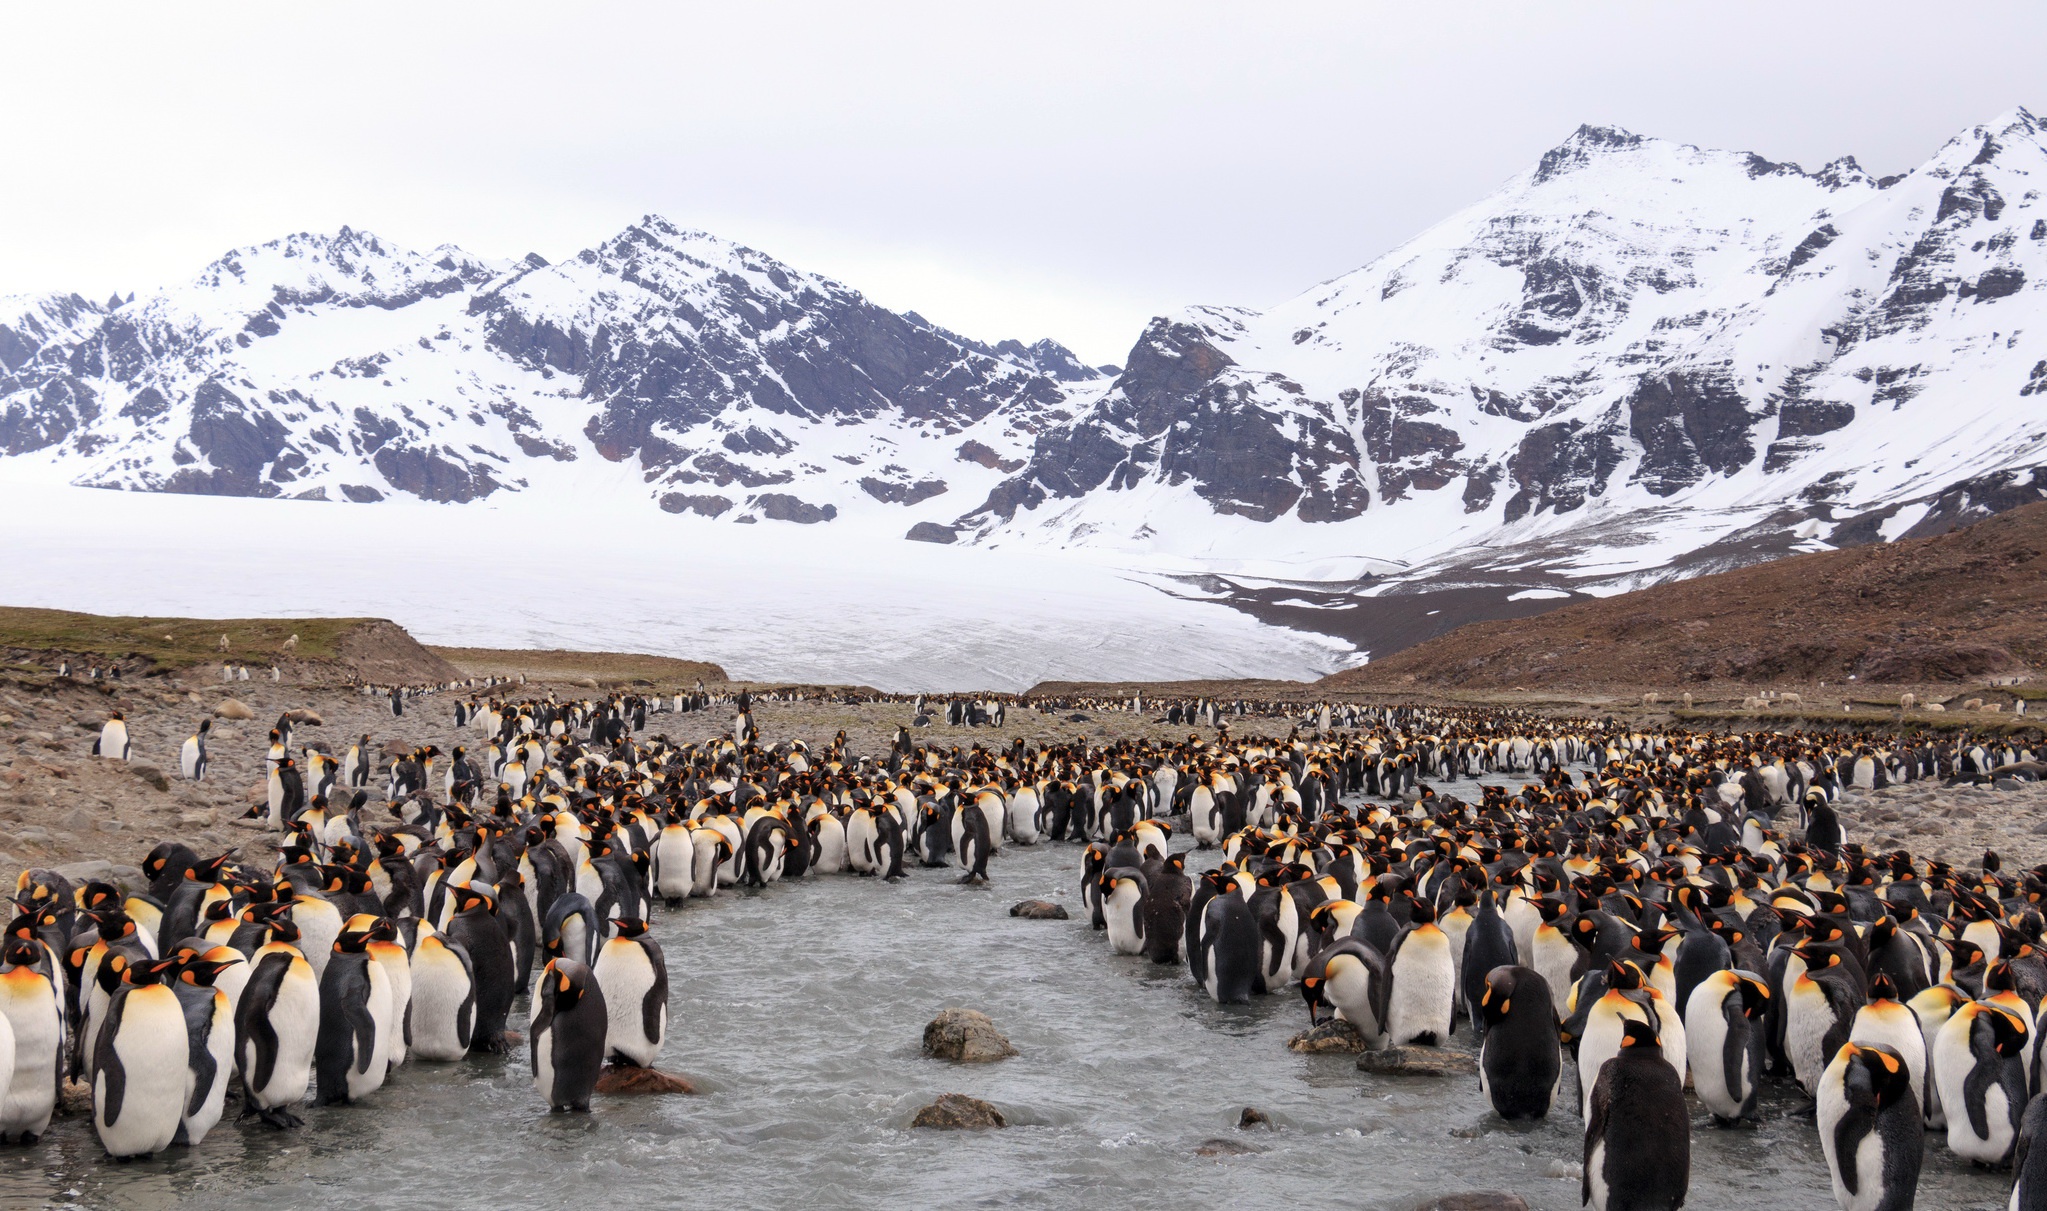 424859 descargar imagen animales, pingüino, pingüino real, montaña, aves: fondos de pantalla y protectores de pantalla gratis